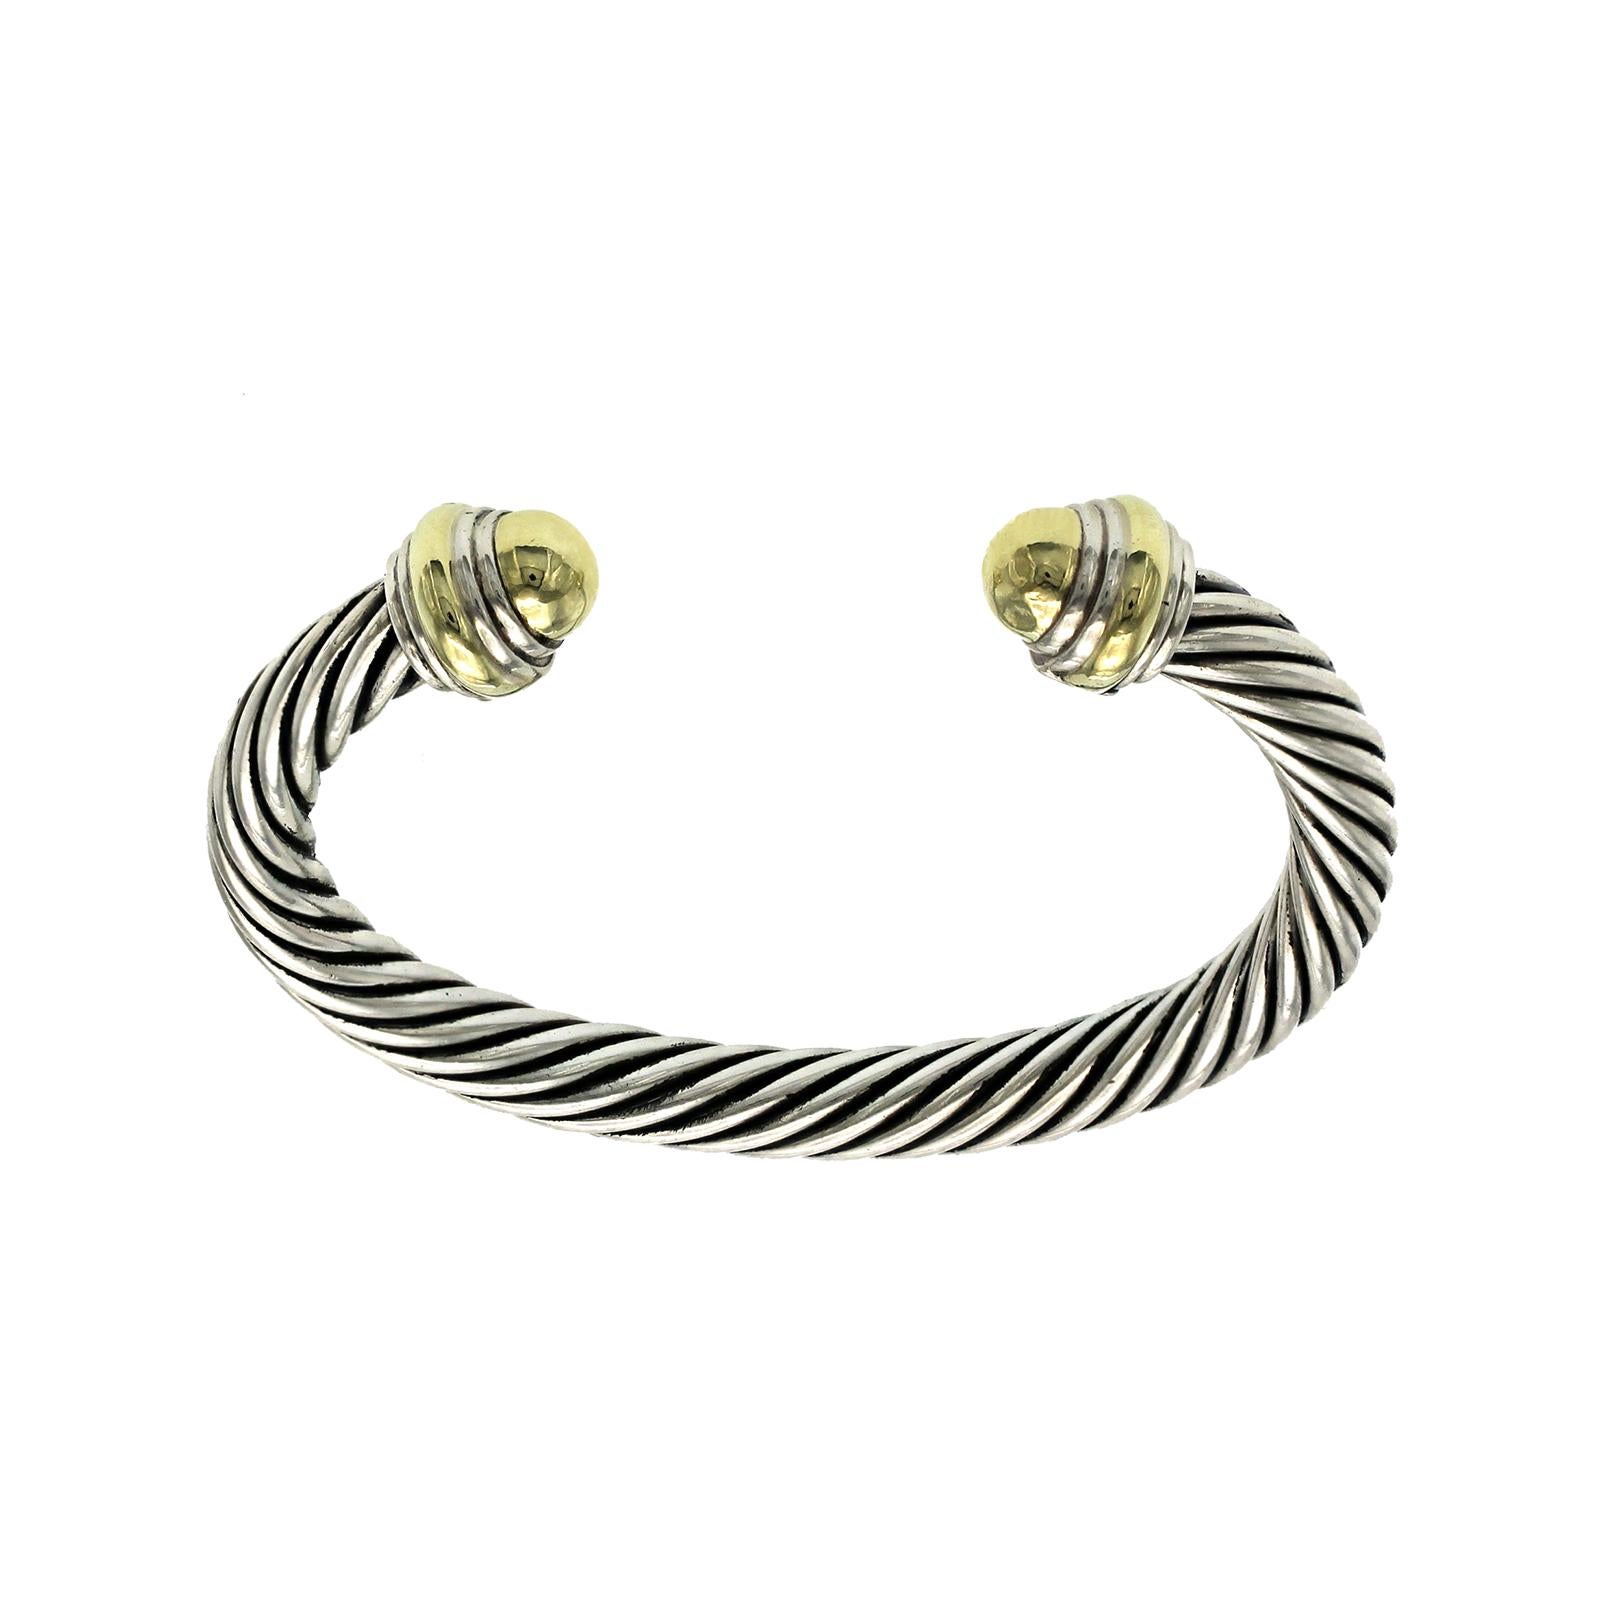 Women's or Men's David Yurman 925 Sterling Silver & 14k Gold 7mm Cable Cuff Bracelet Size 6.5